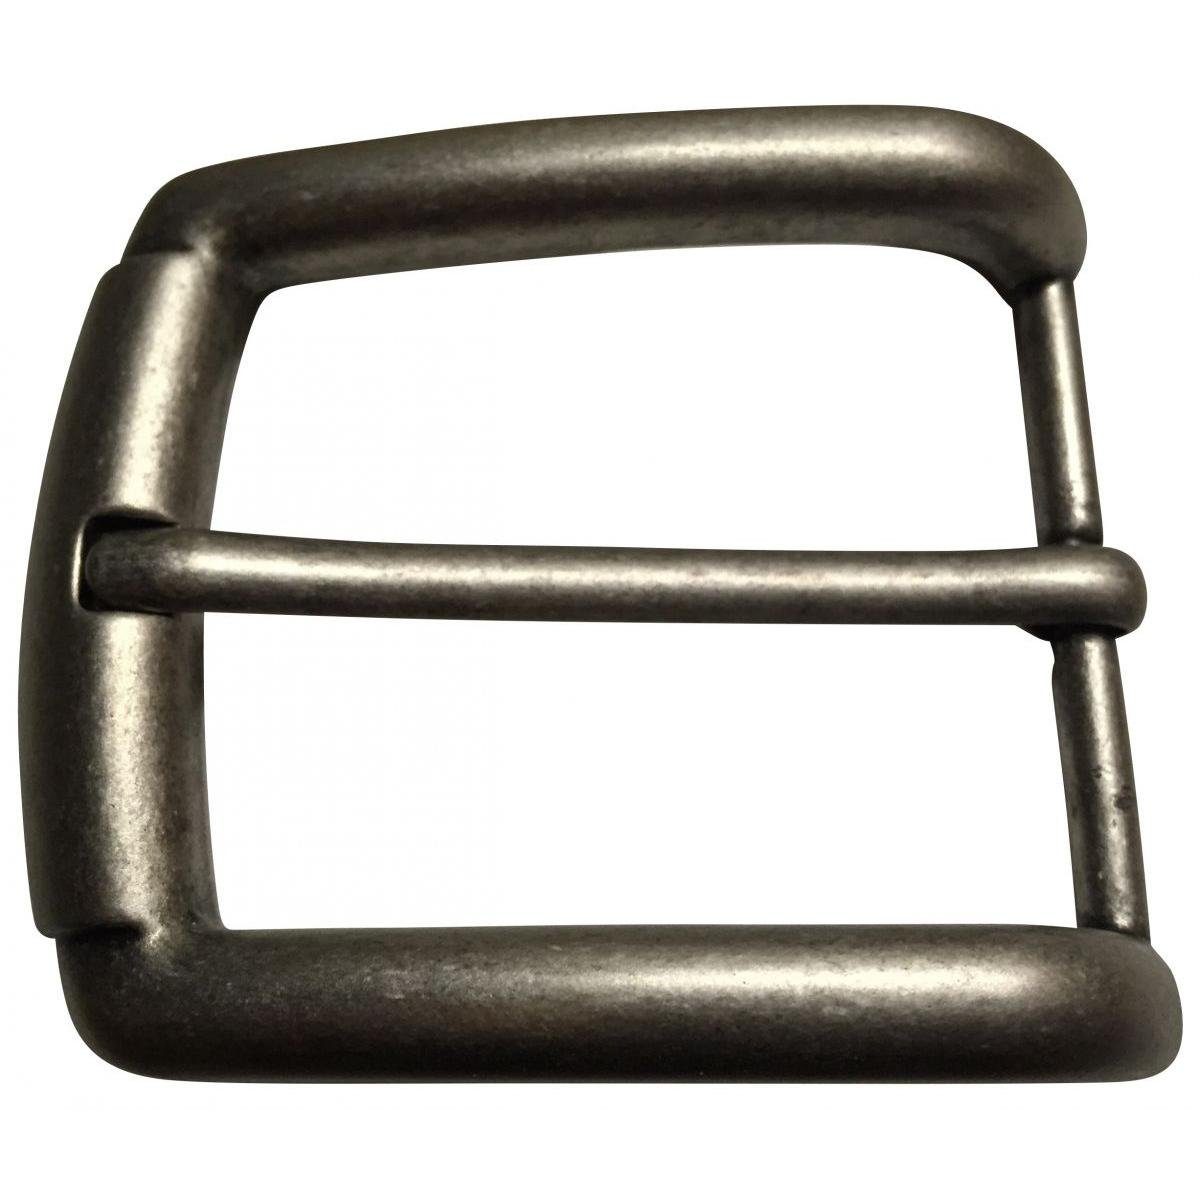 BELTINGER Gürtelschnalle Old Nickel 4,0 cm - Gürtelschließe 40mm - Dorn-Schließe - Gürtel bis 4